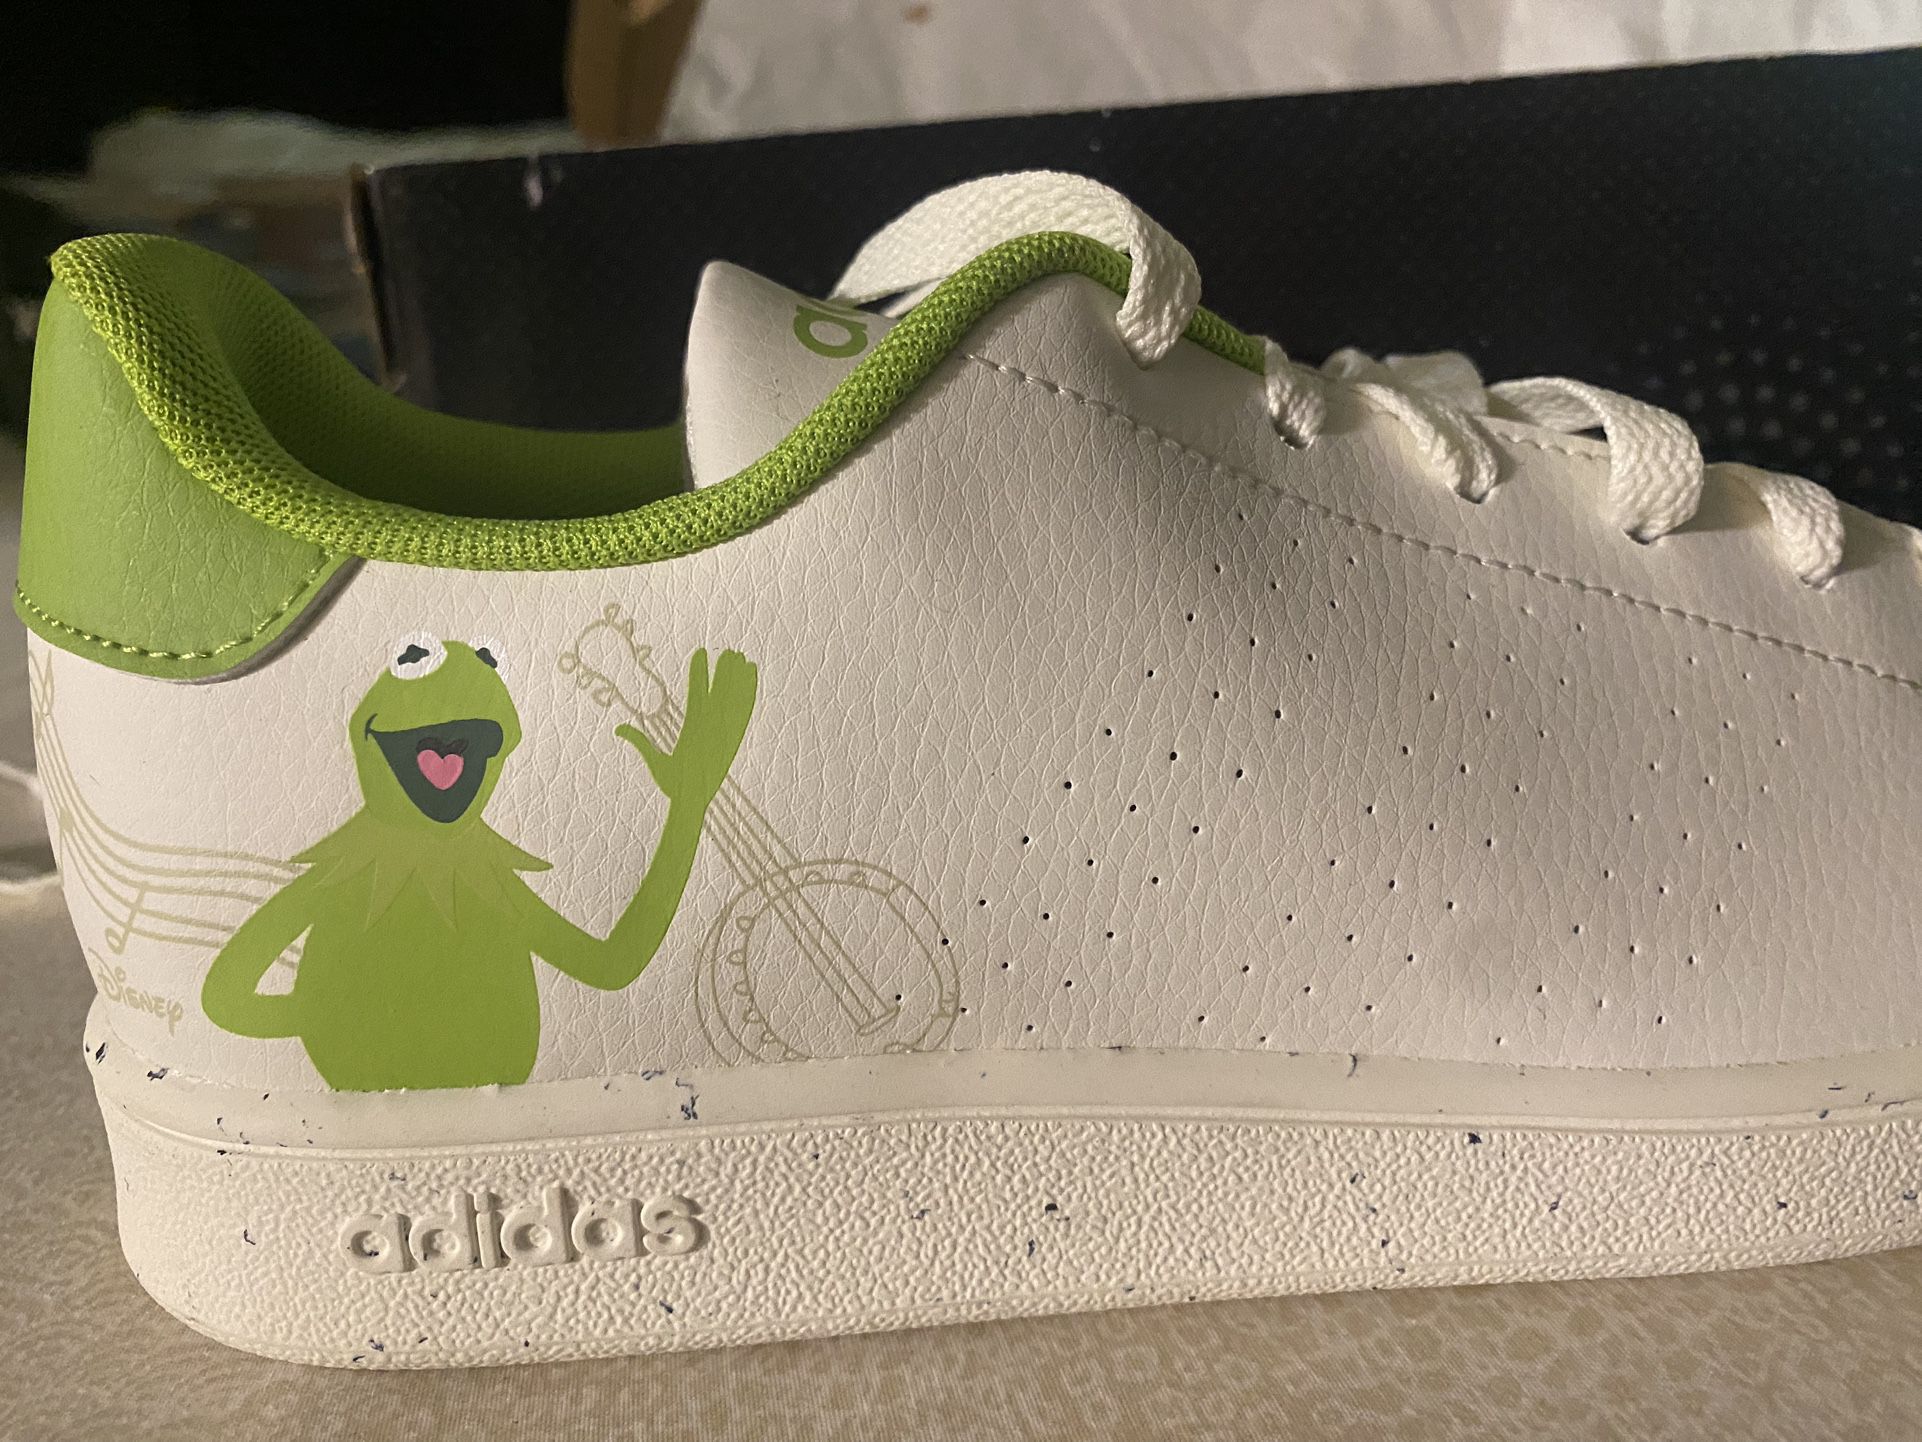 Adidas Kermit The Frog Size 4 Big Kids